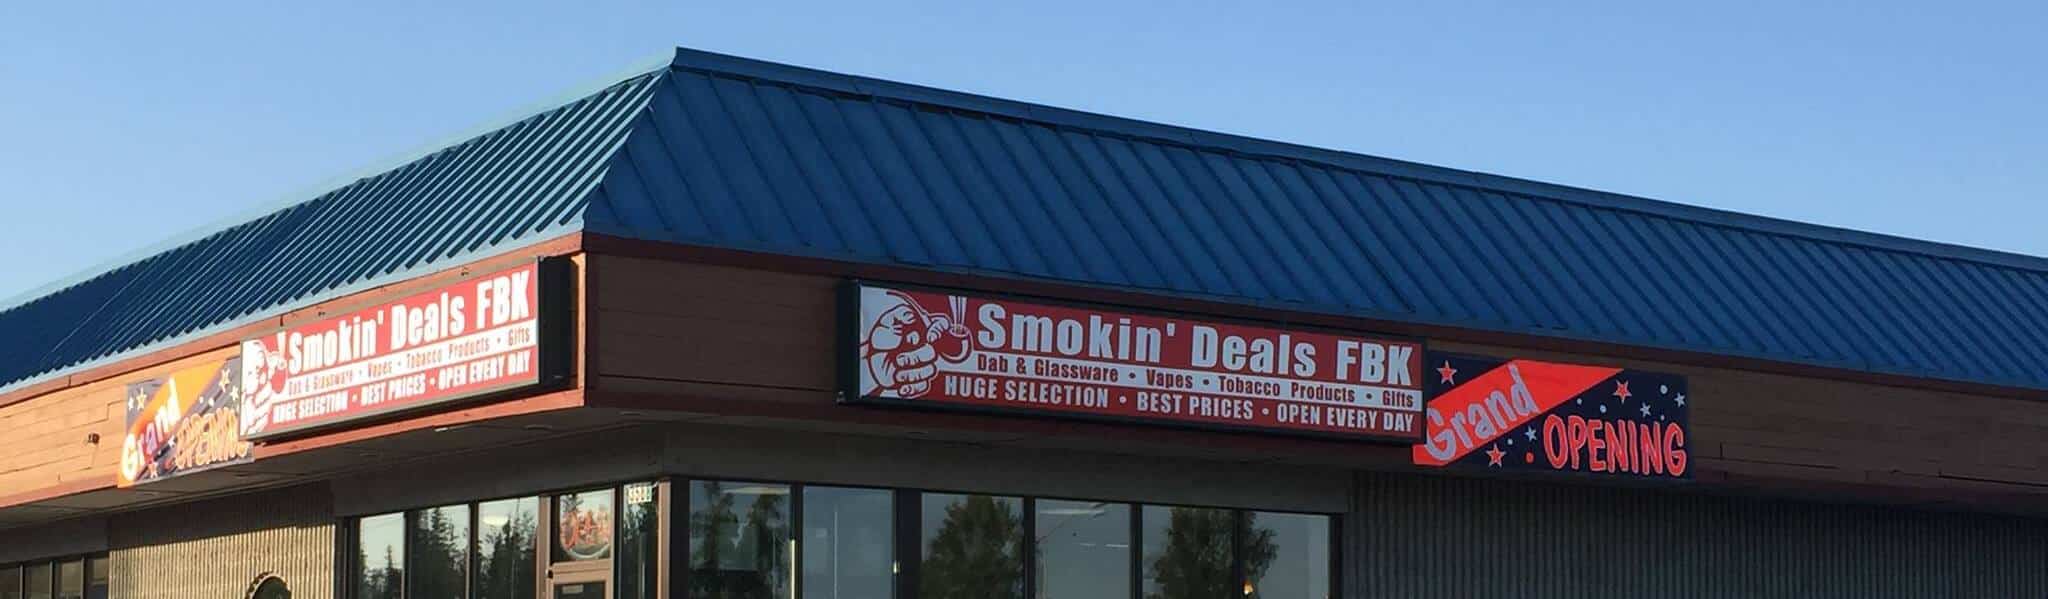 image of smokin deals fbk